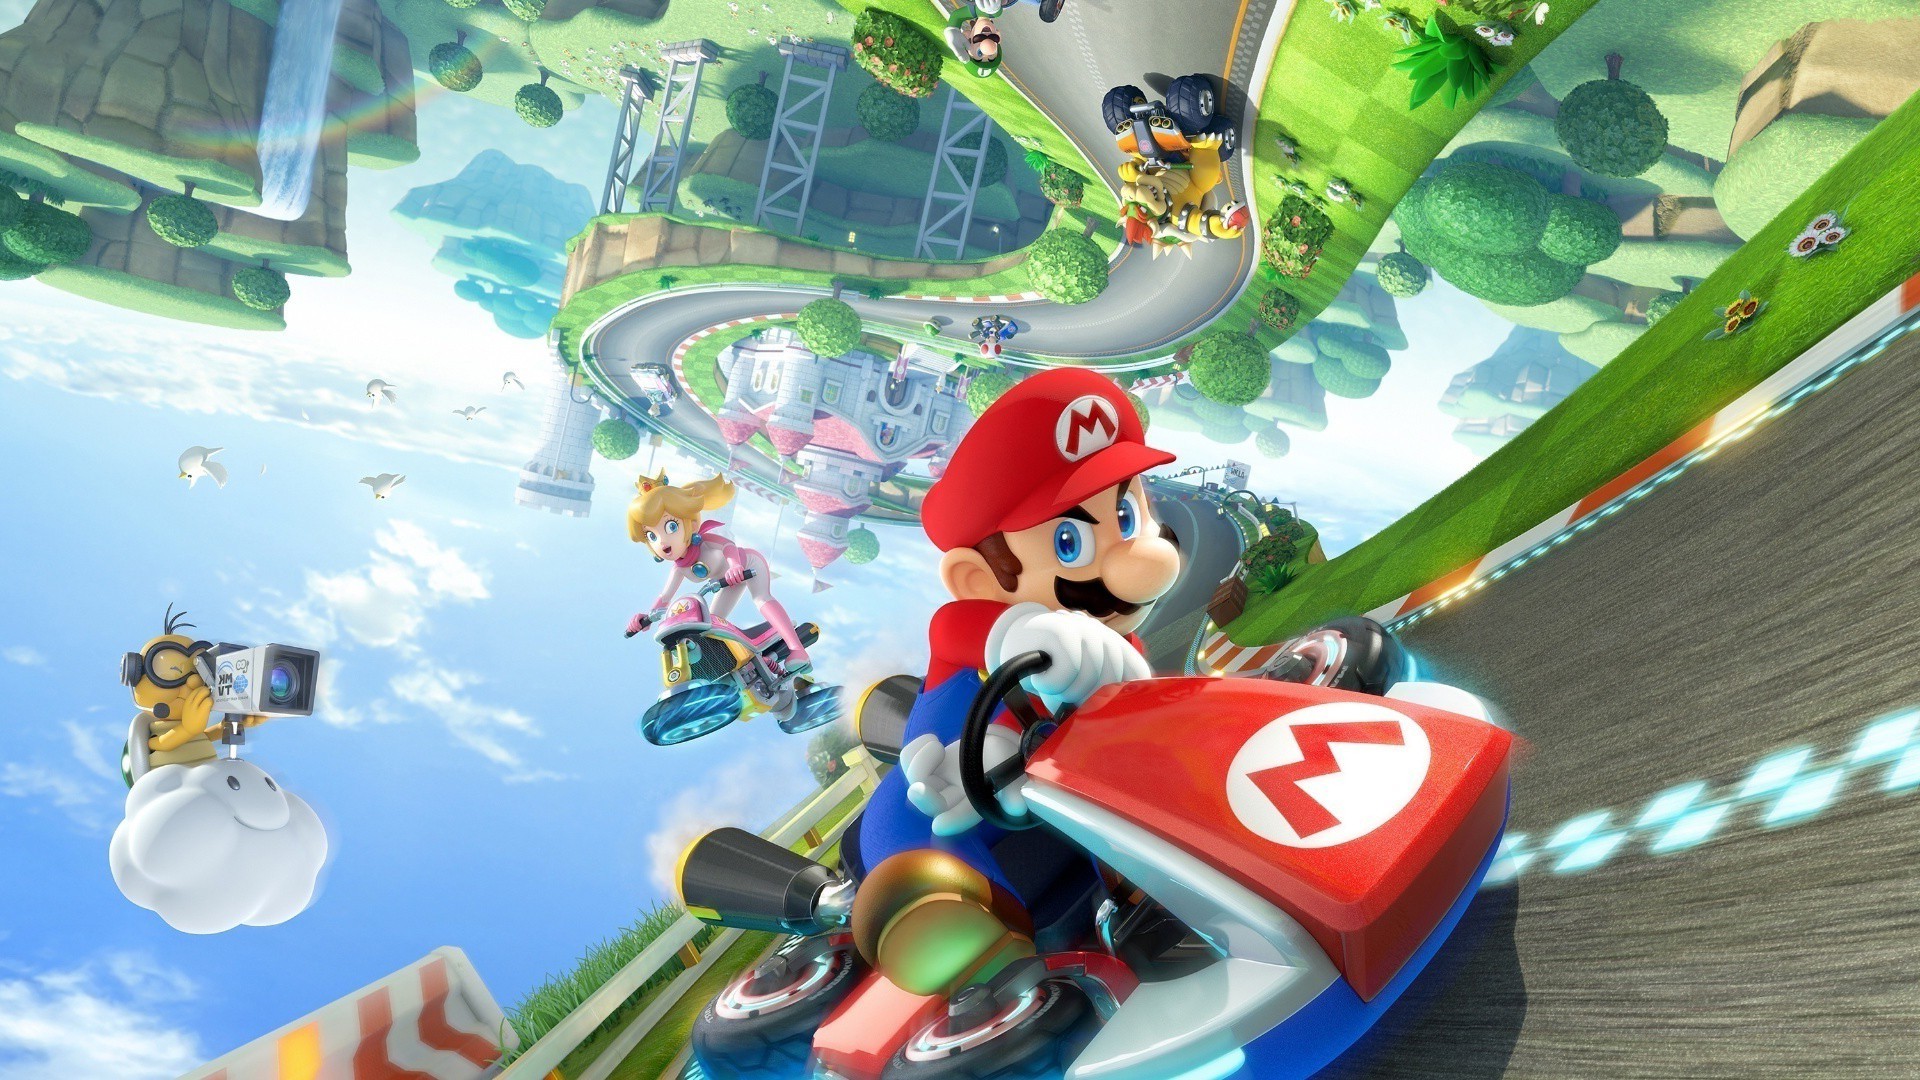 Kart, Super Mario, Princess Peach, Bowser, Mario Kart, Nintendo, Wii U, Video Games Wallpaper